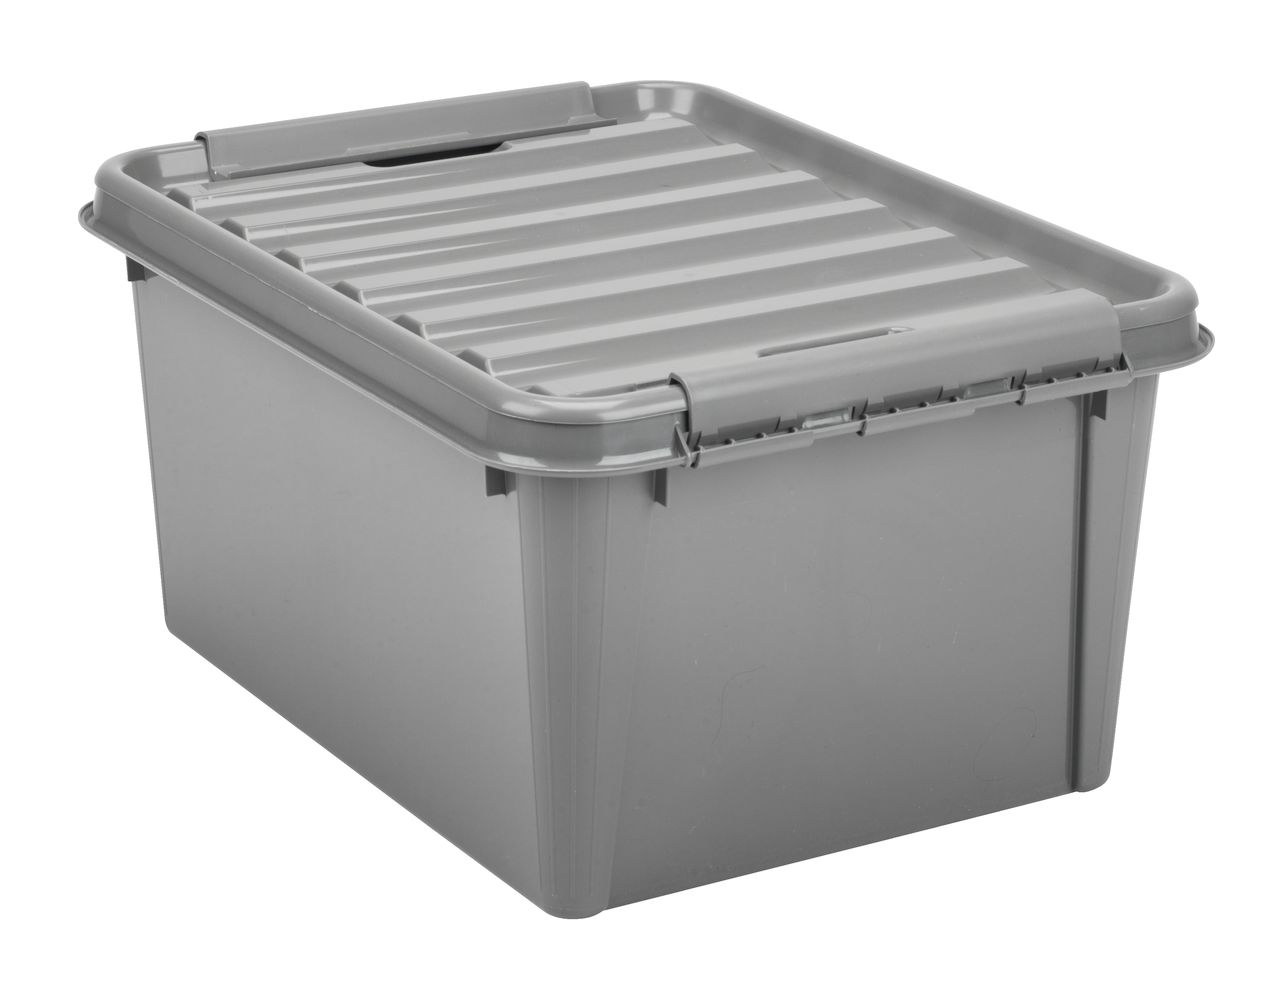 5 Five Simply Smart Plastic Storage Box with Lid Beige 31x31x31cm S7902138  1pcs